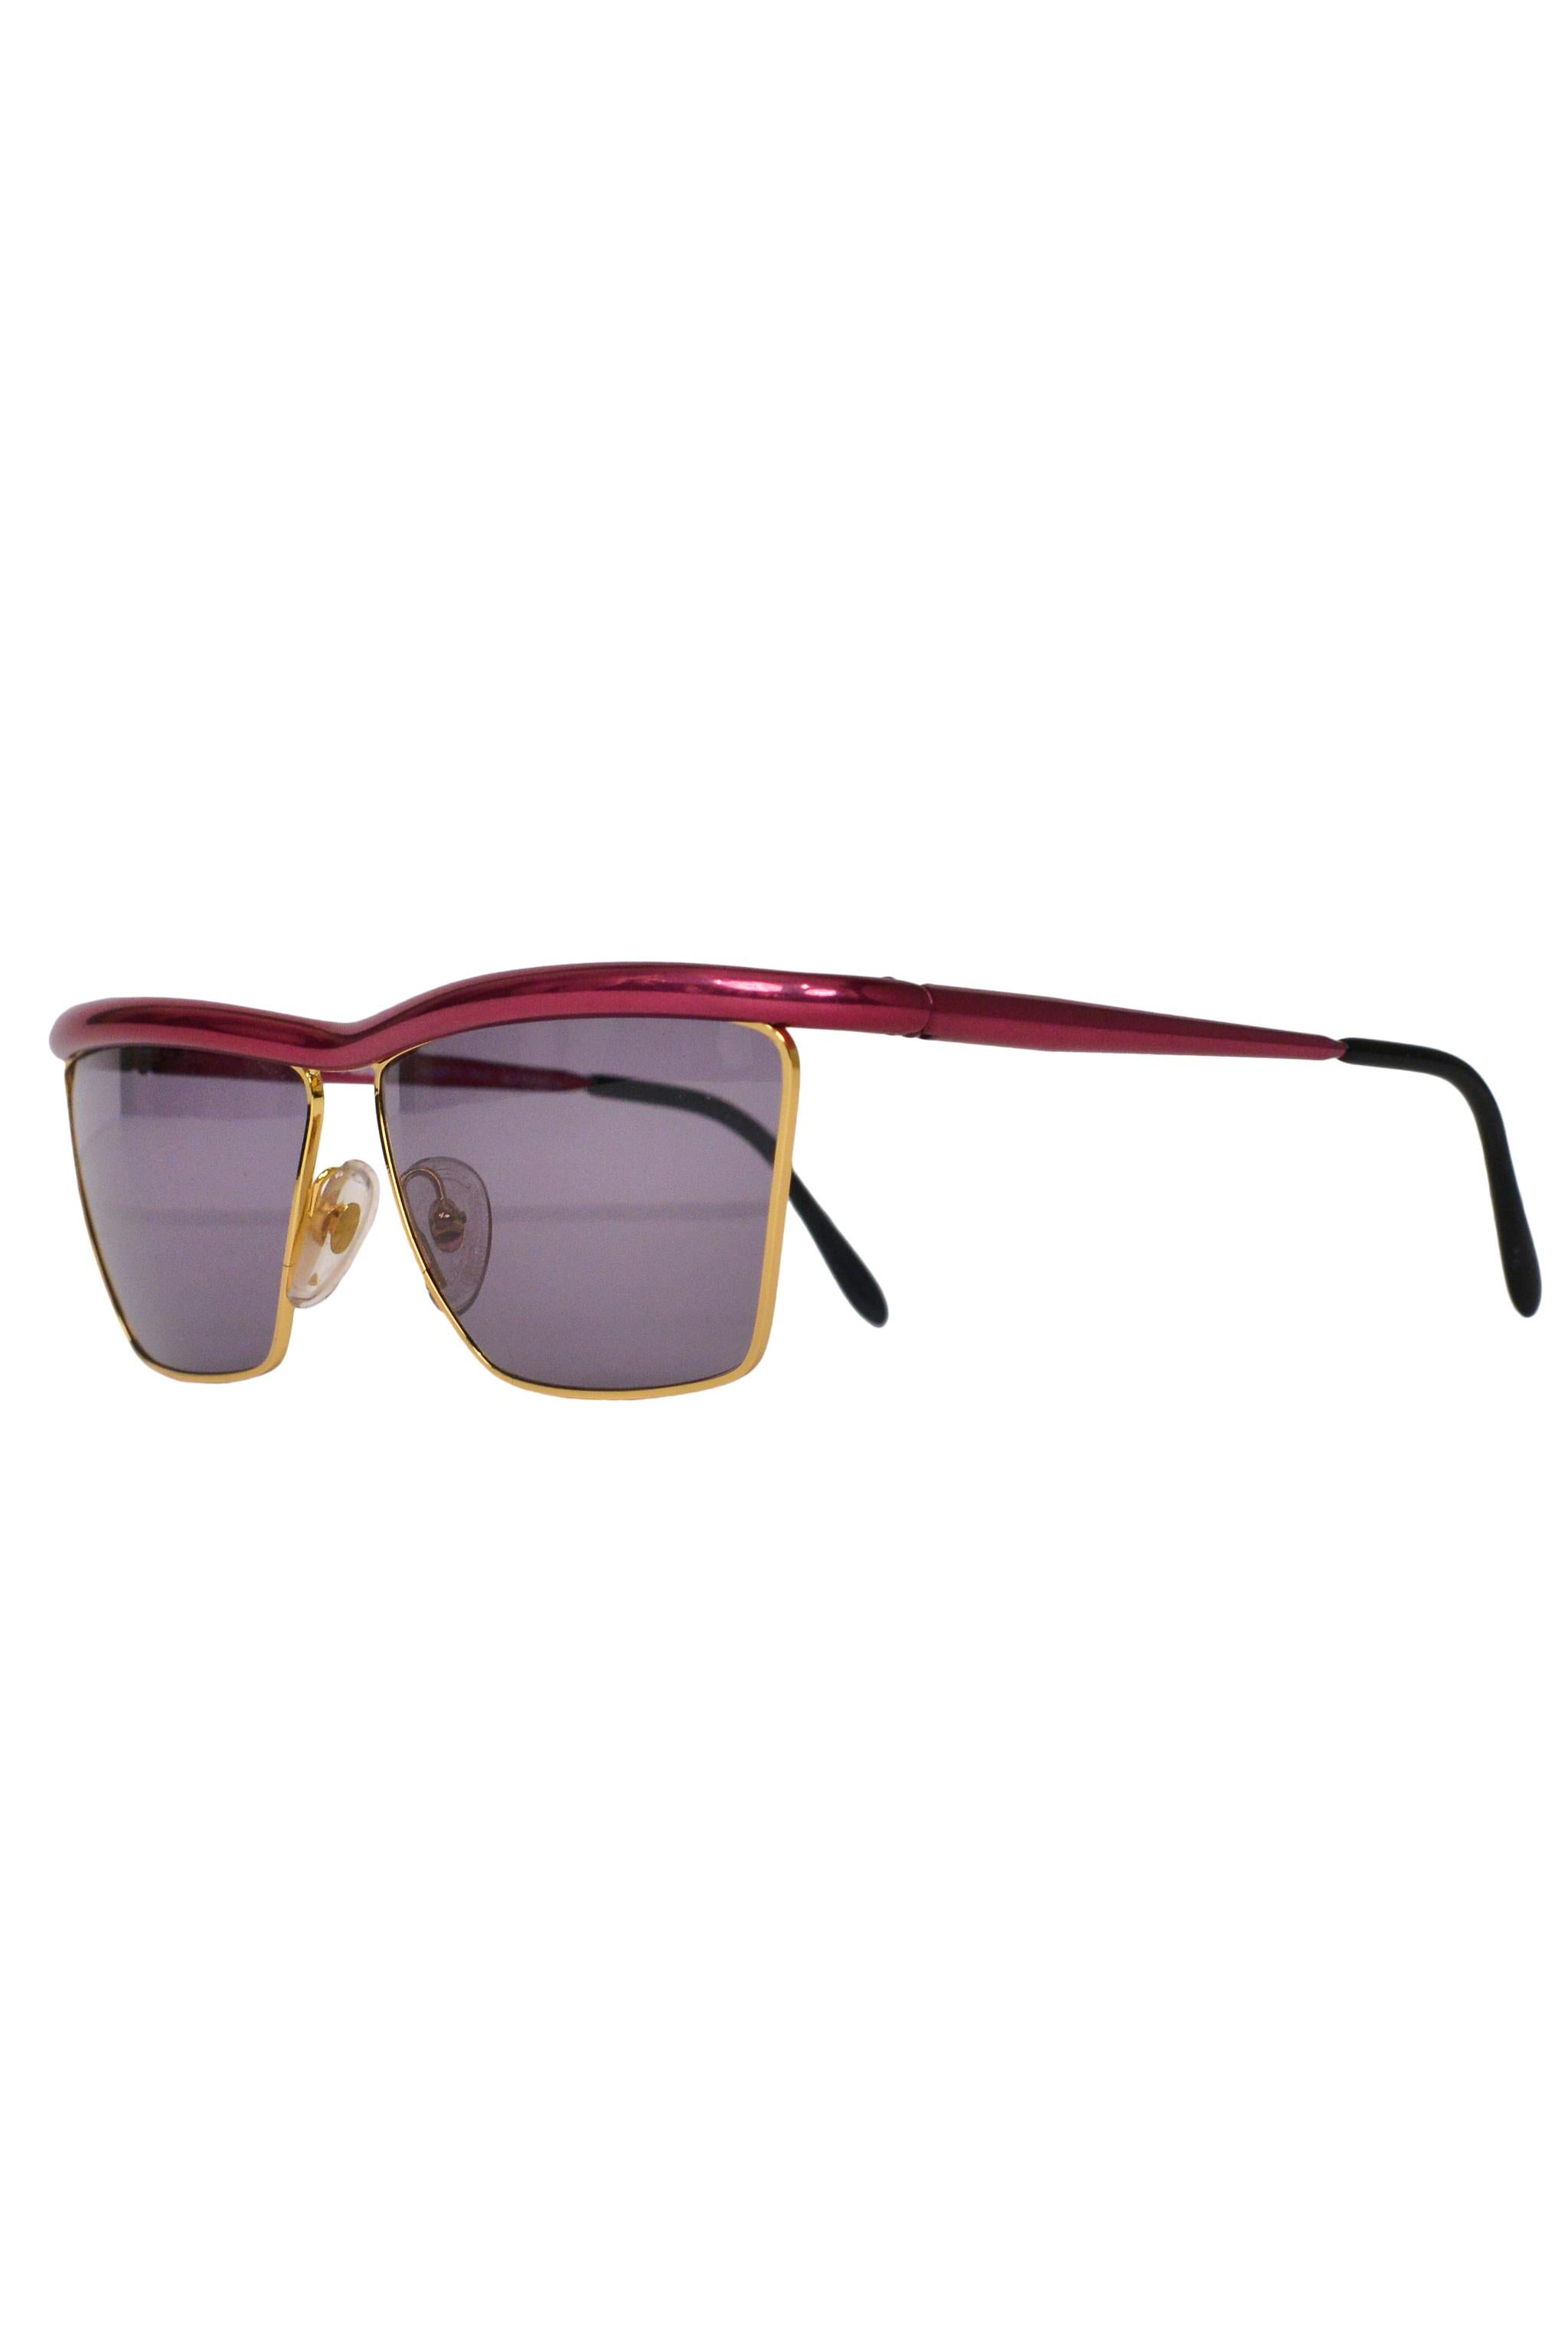 Vintage Gianfranco Ferre Metallic Pinke Sonnenbrille mit Rauchglas-Lenses  (Grau) im Angebot